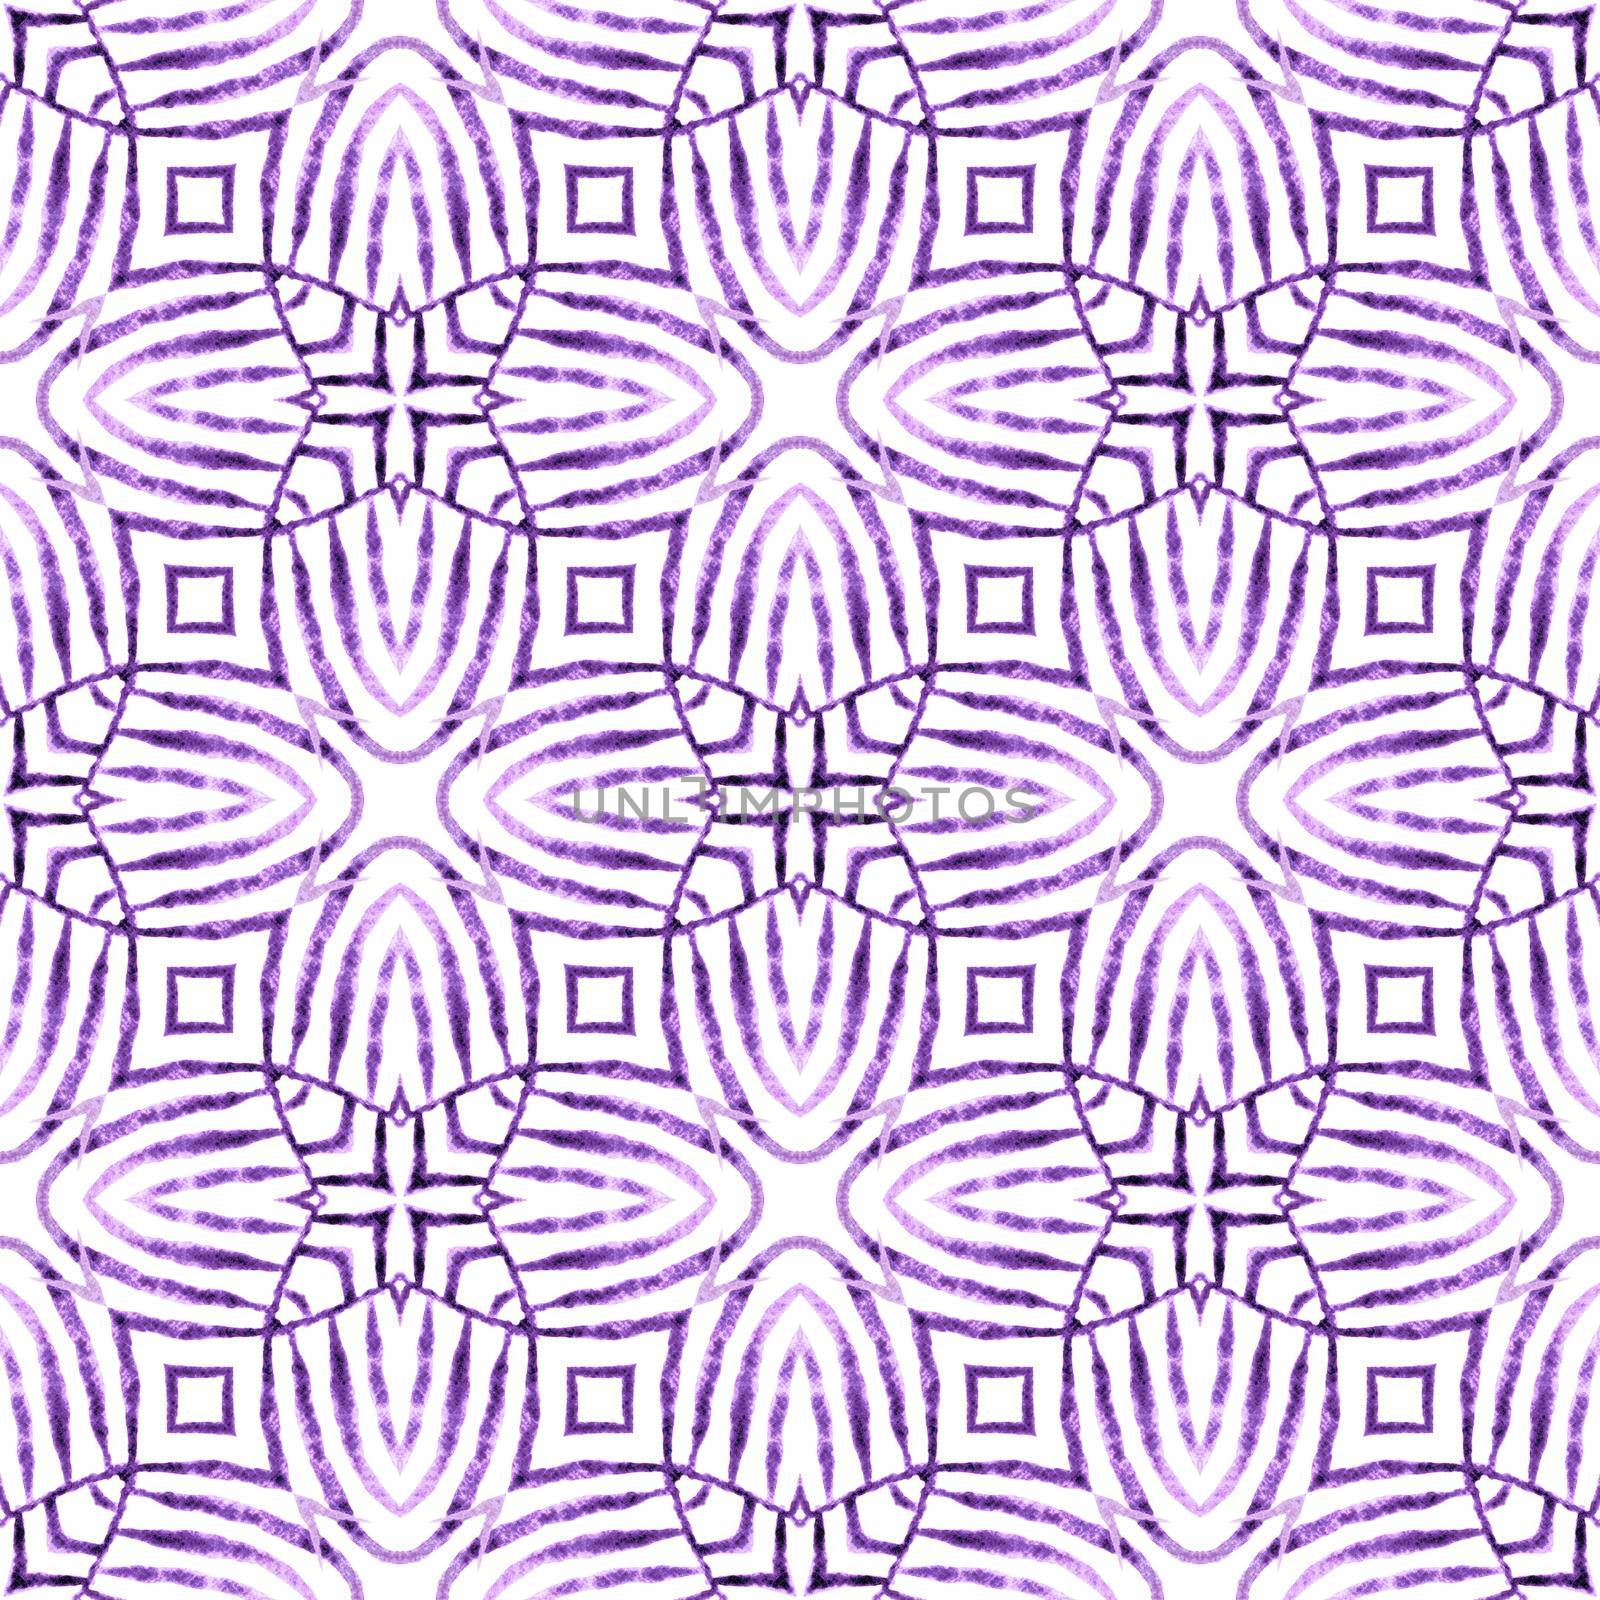 Repeating striped hand drawn border. Purple radiant boho chic summer design. Striped hand drawn design. Textile ready interesting print, swimwear fabric, wallpaper, wrapping.